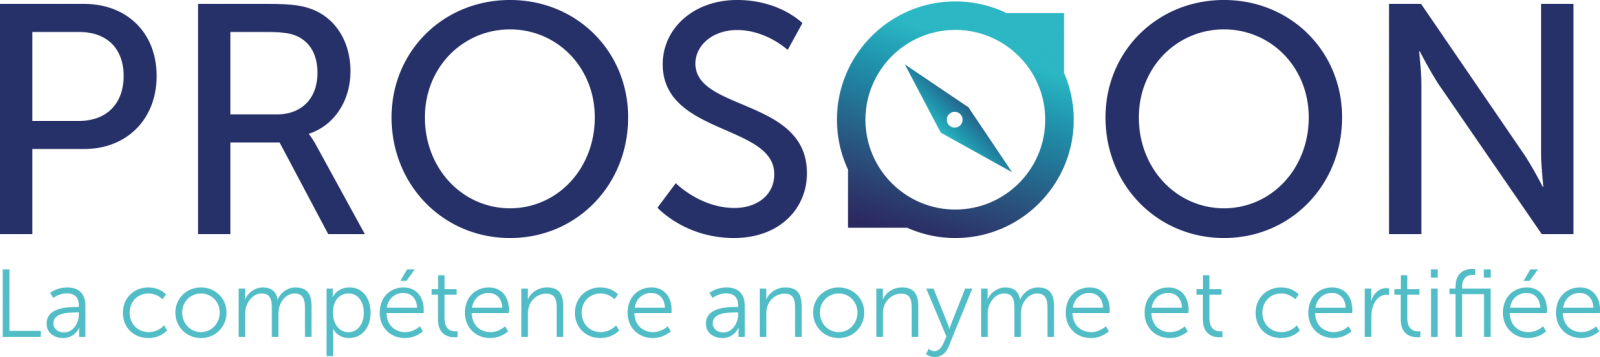 Prosoon Logo 1 2